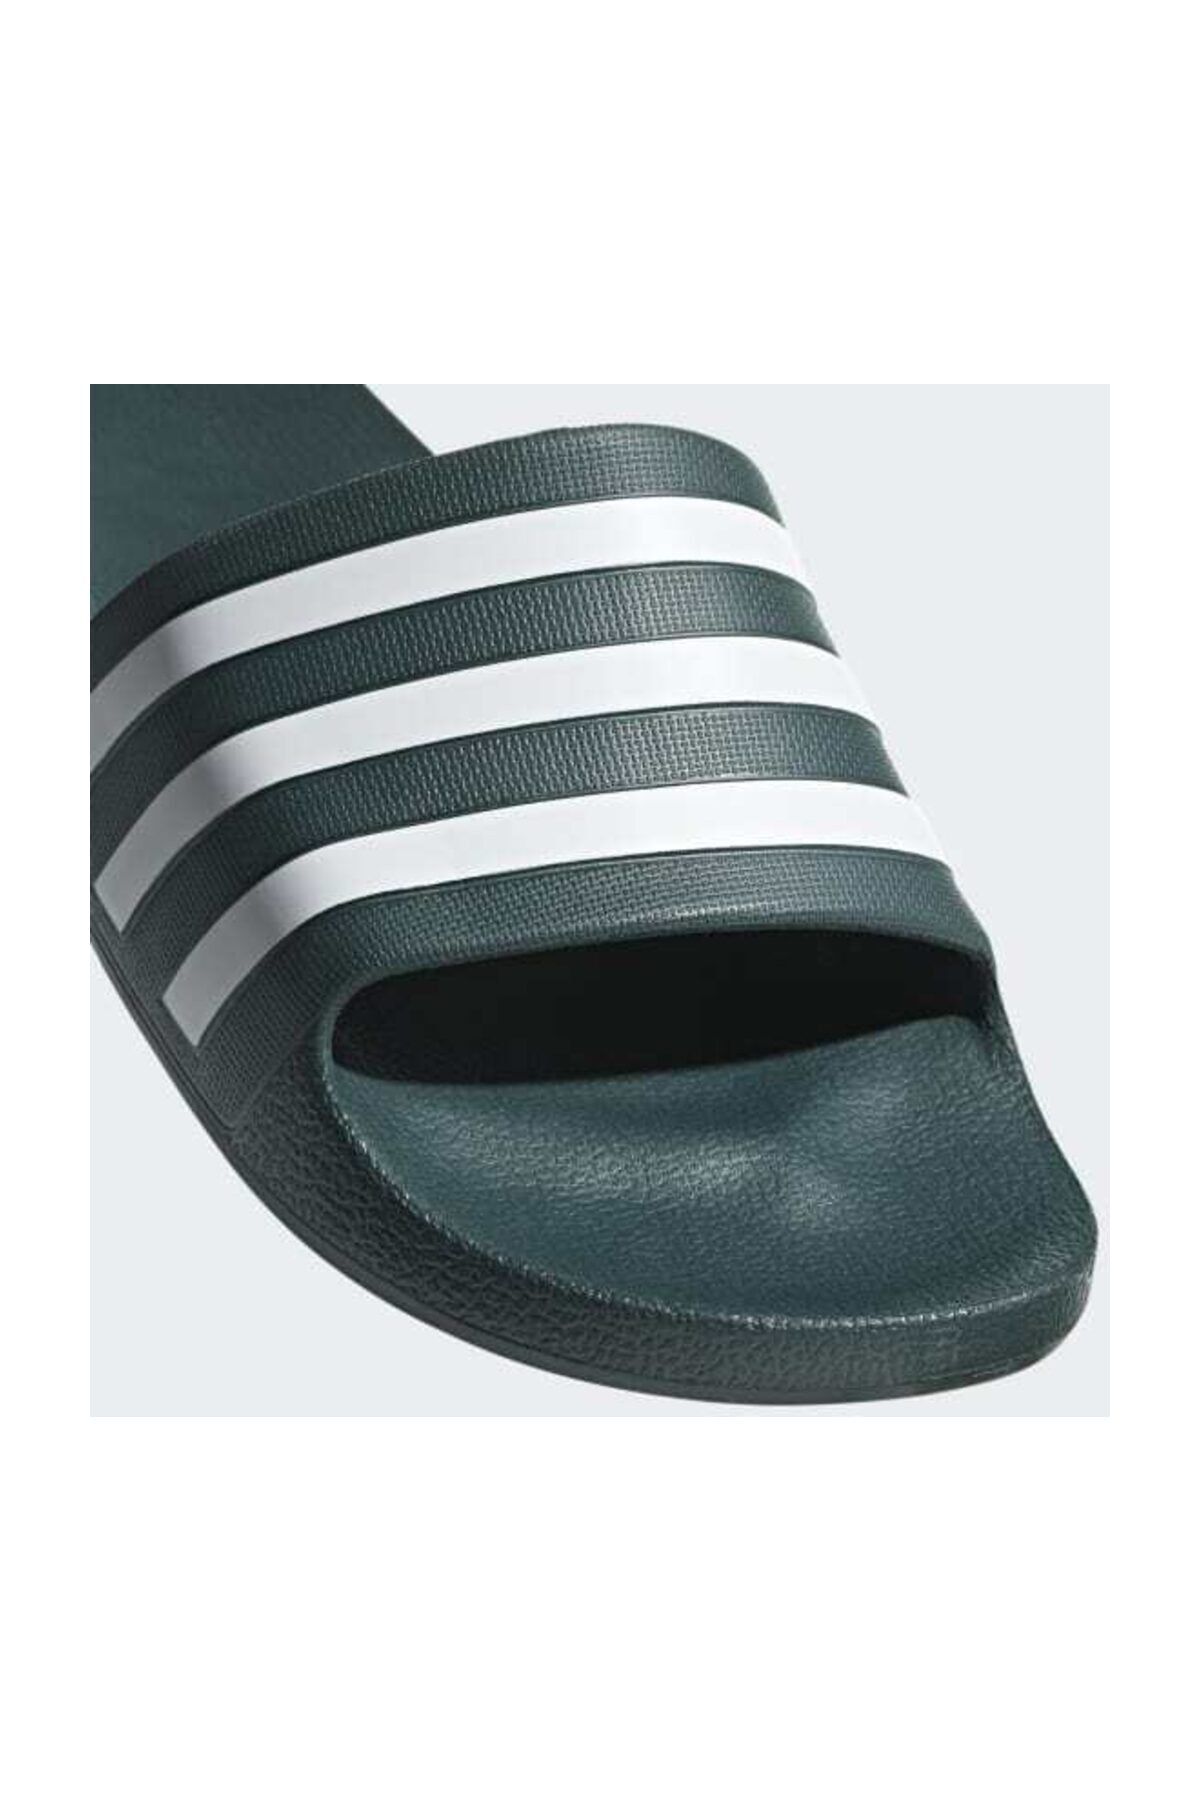 adidas کفش ورزشی بزرگسالان Unisex F35537